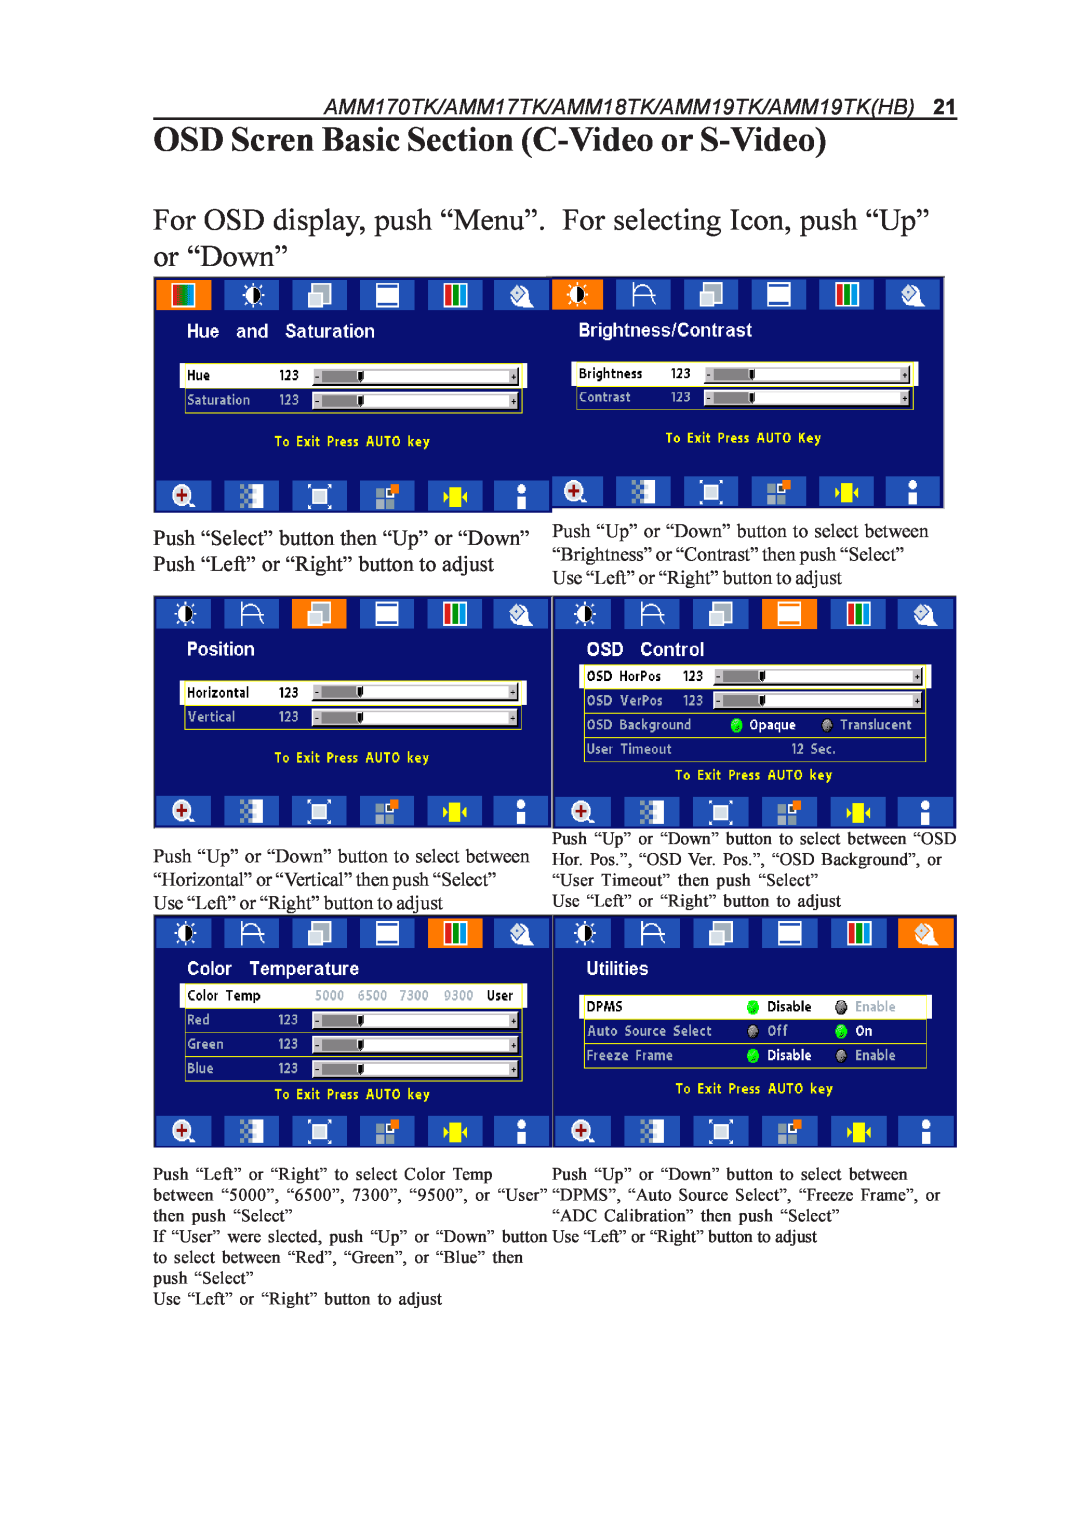 Elo TouchSystems manual OSD Scren Basic Section C-Video or S-Video, AMM170TK/AMM17TK/AMM18TK/AMM19TK/AMM19TKHB 